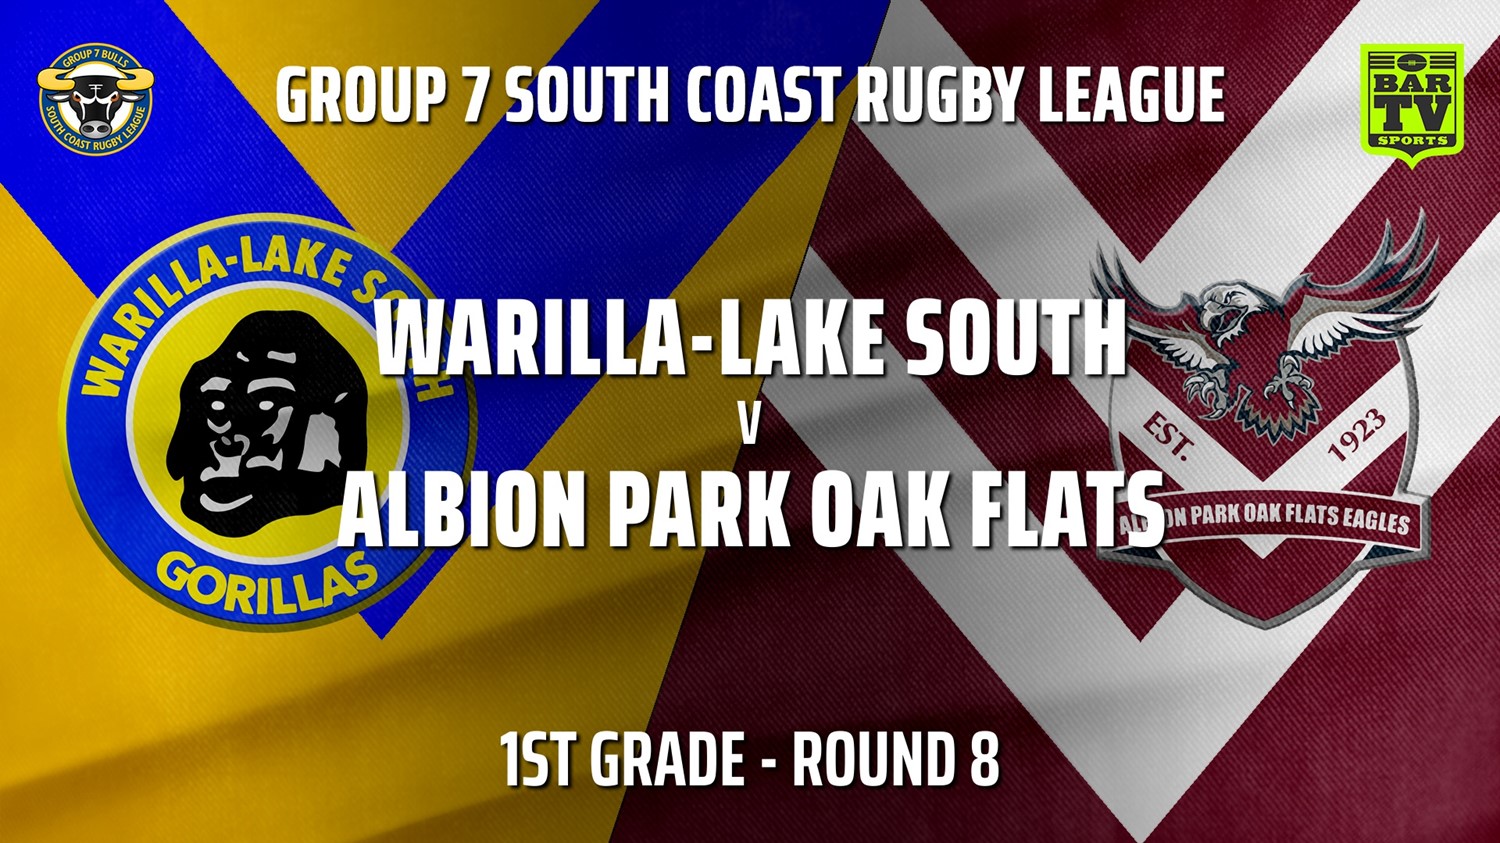 210606-Group 7 RL Round 8 - 1st Grade - Warilla-Lake South v Albion Park Oak Flats Minigame Slate Image